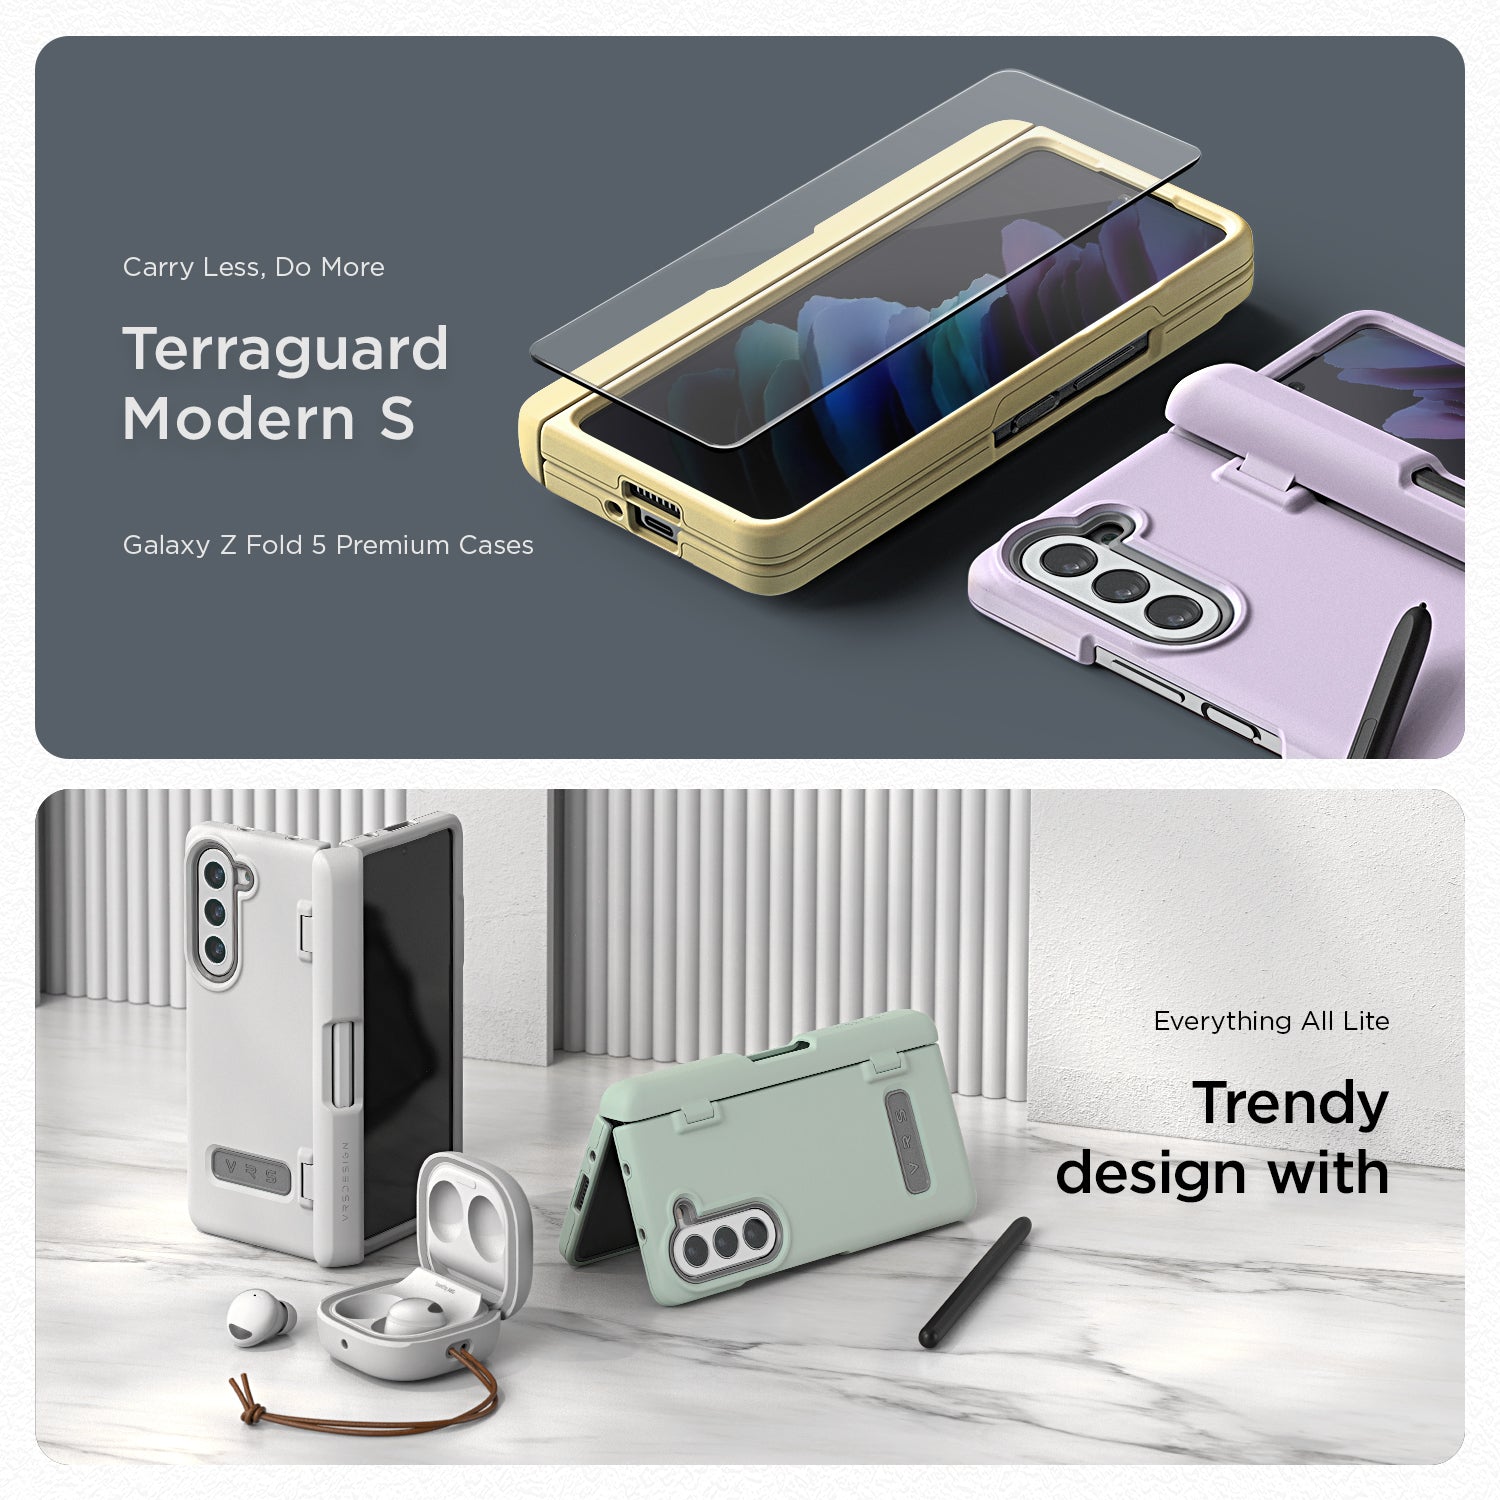 New Galaxy Z Fold 5 modern rugged lightweight minimalist case by